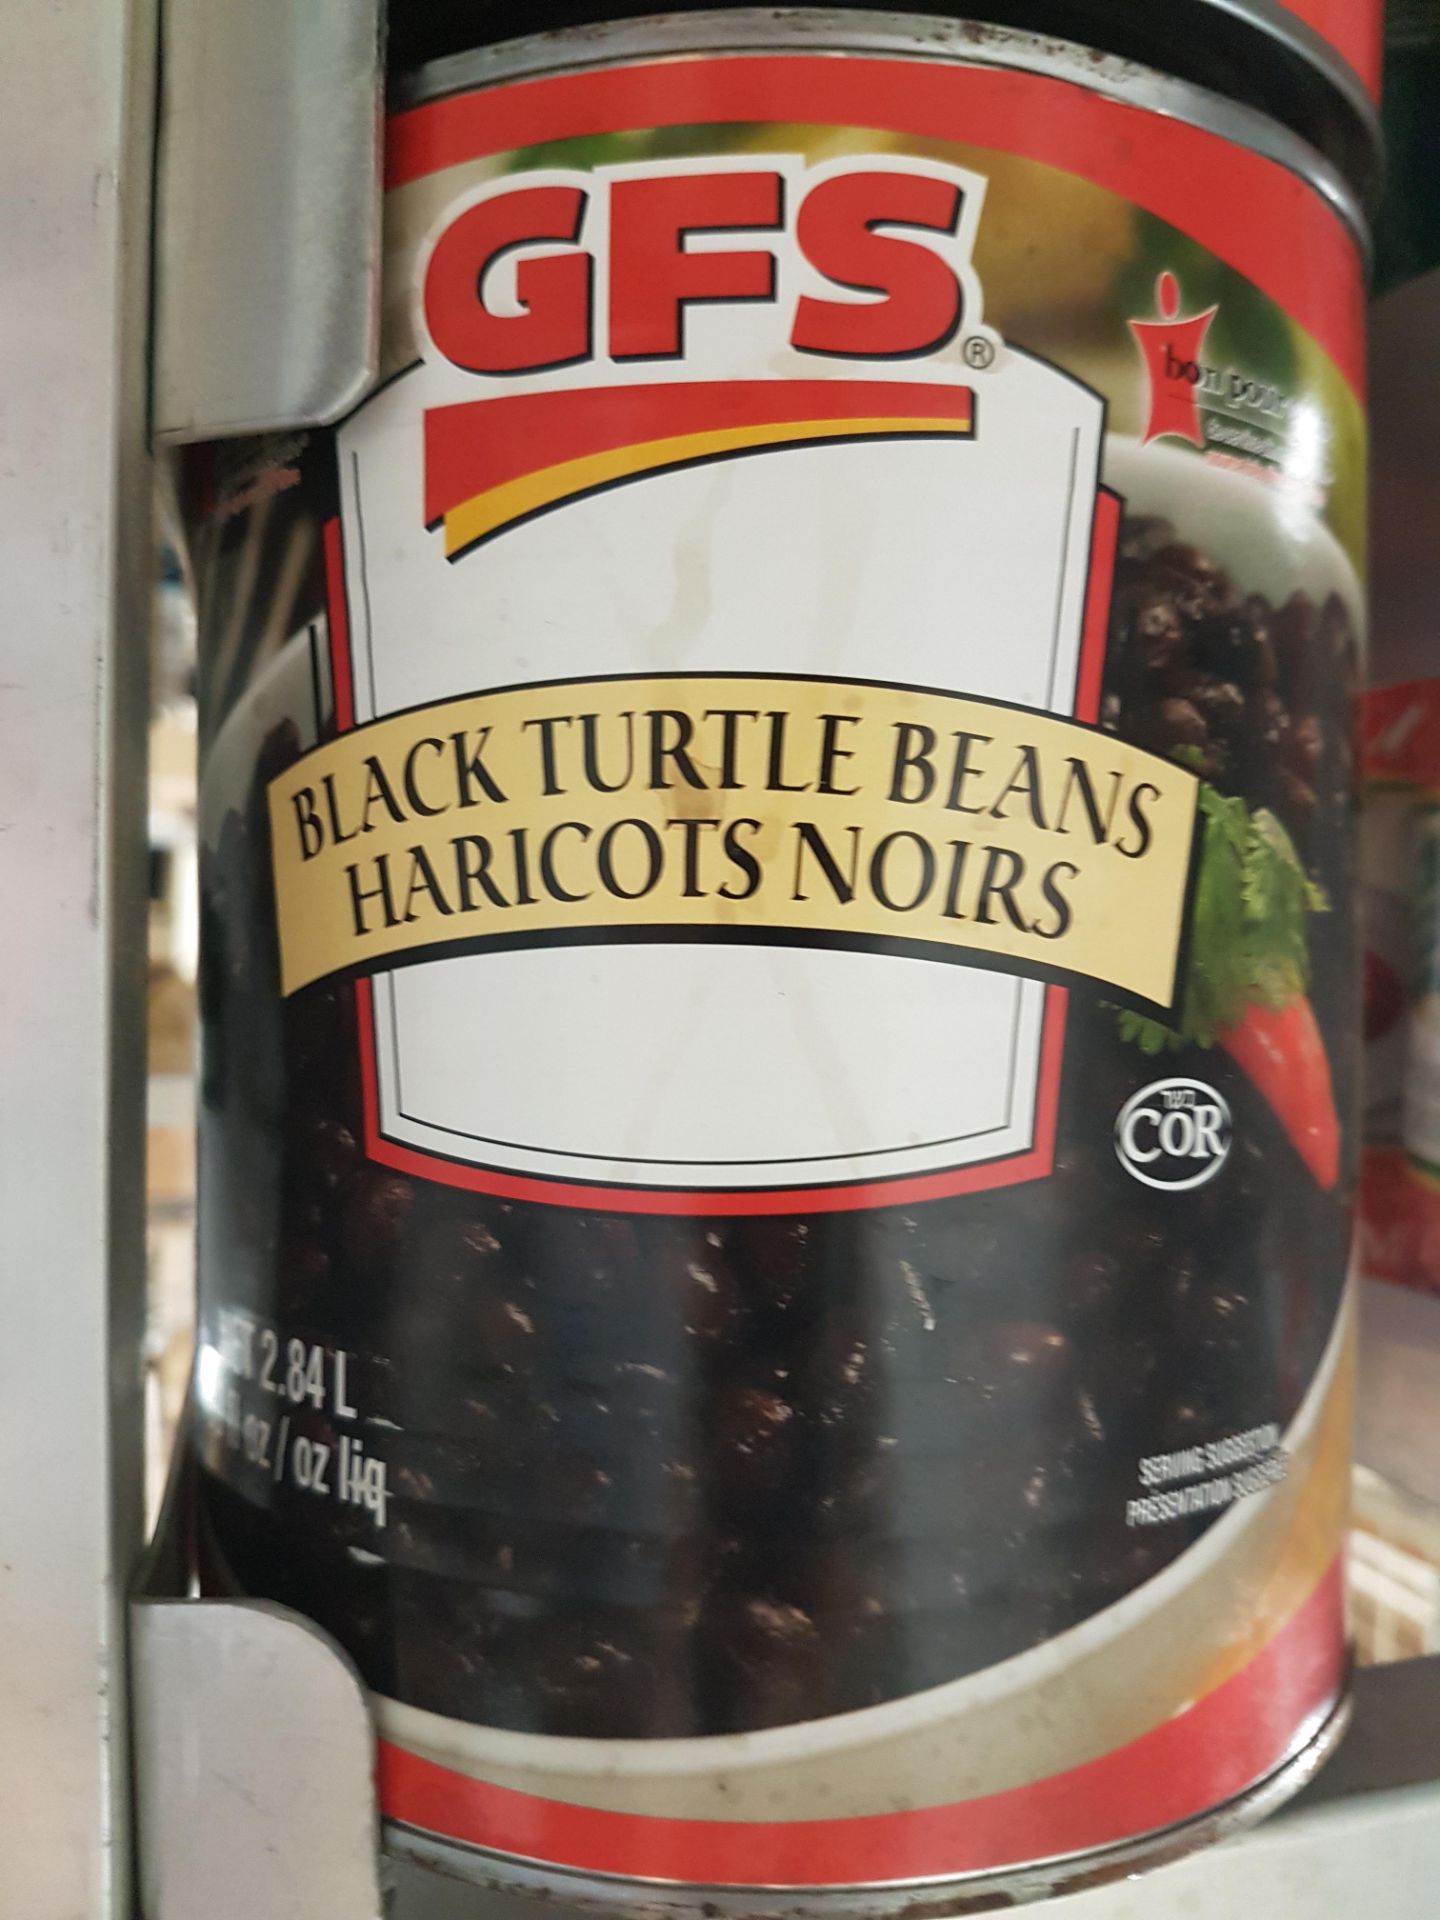 GFS Black Turtle Beans - 6 x 2.84LT Cans - Dented